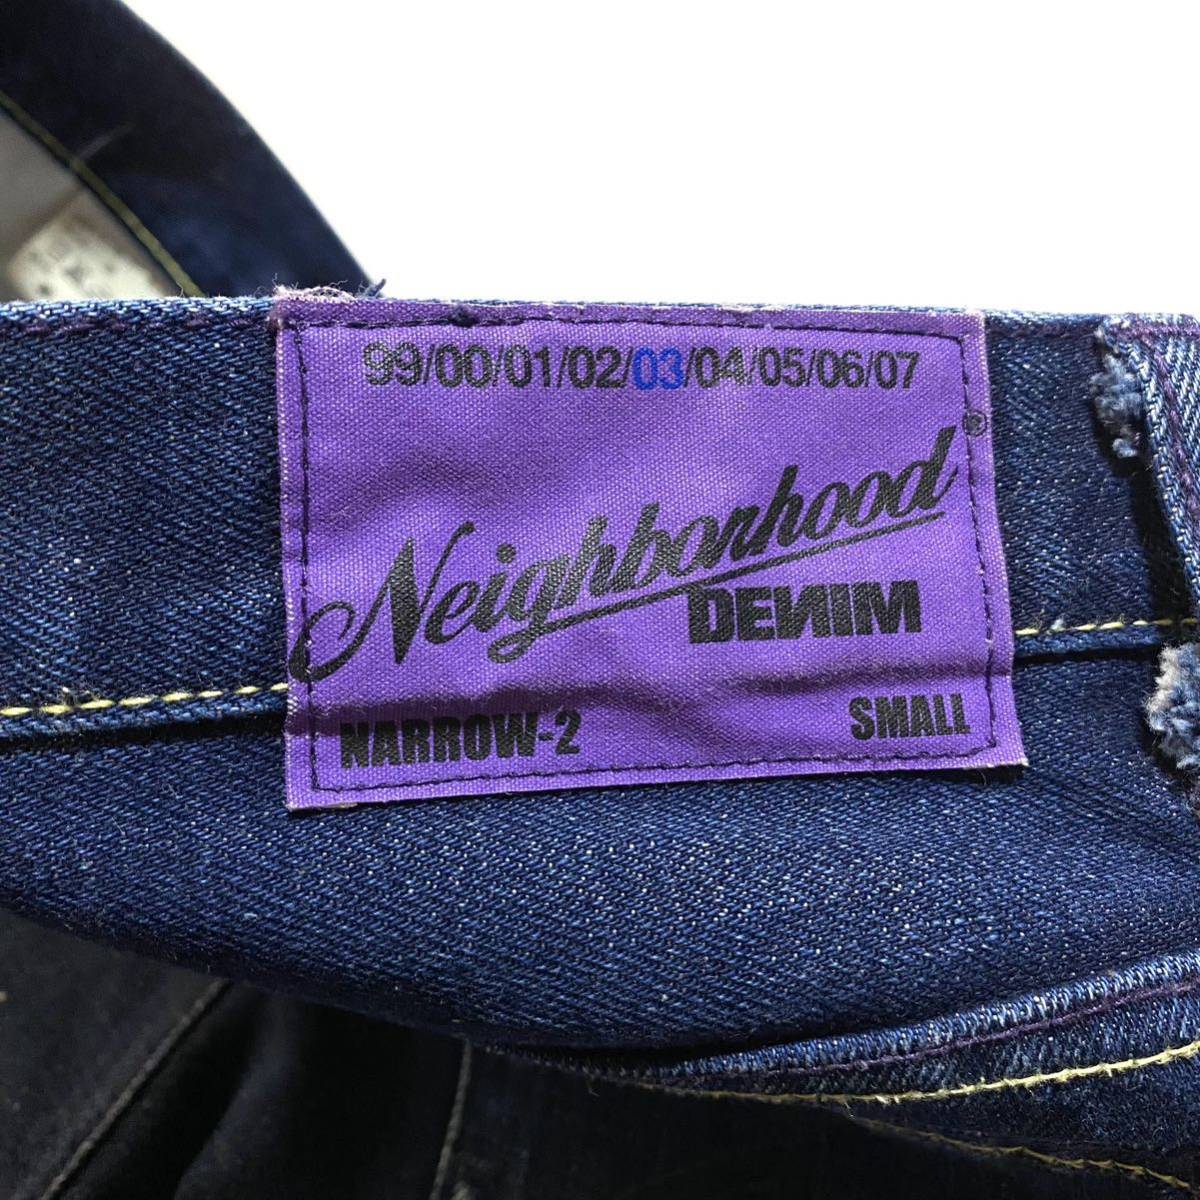 NEIGHBORHOOD Neighborhood NARROW-2 semi flair Denim брюки джинсы размер S